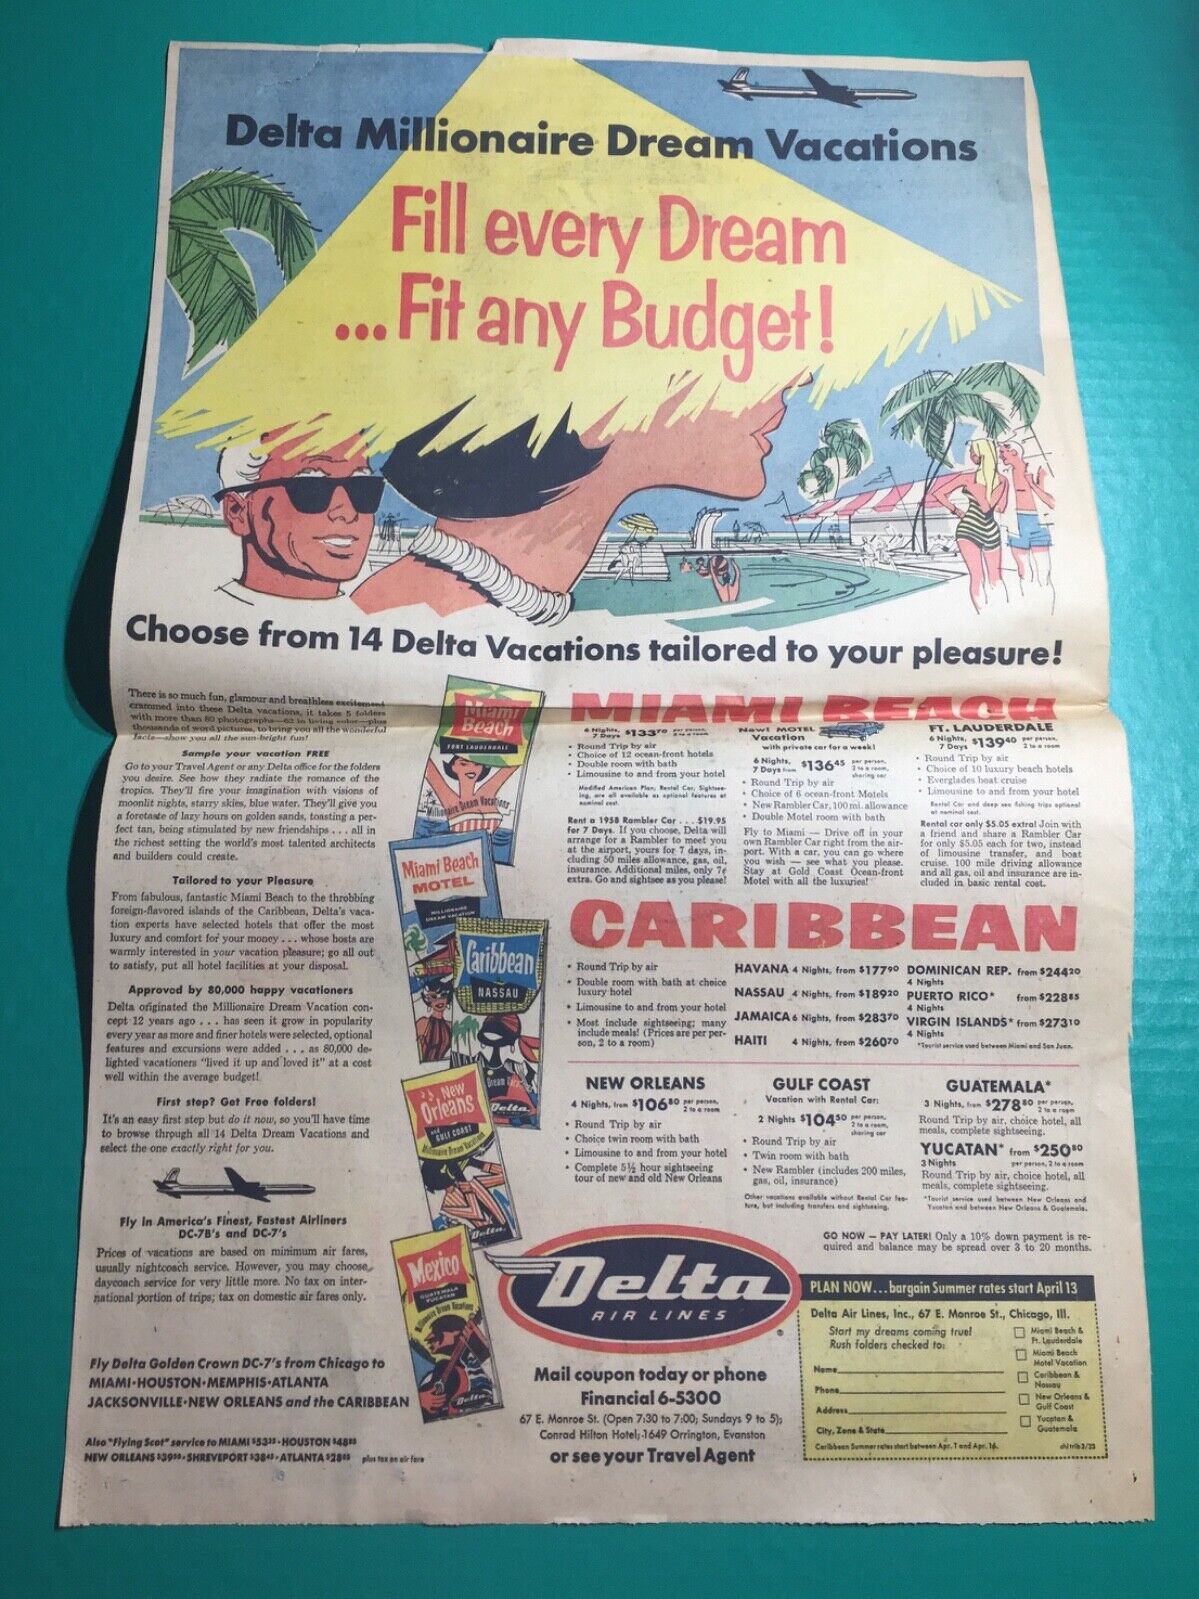 1958 Delta Air Lines airplane print ad Chicago Tribune “Caribbean” Travel 23x15”